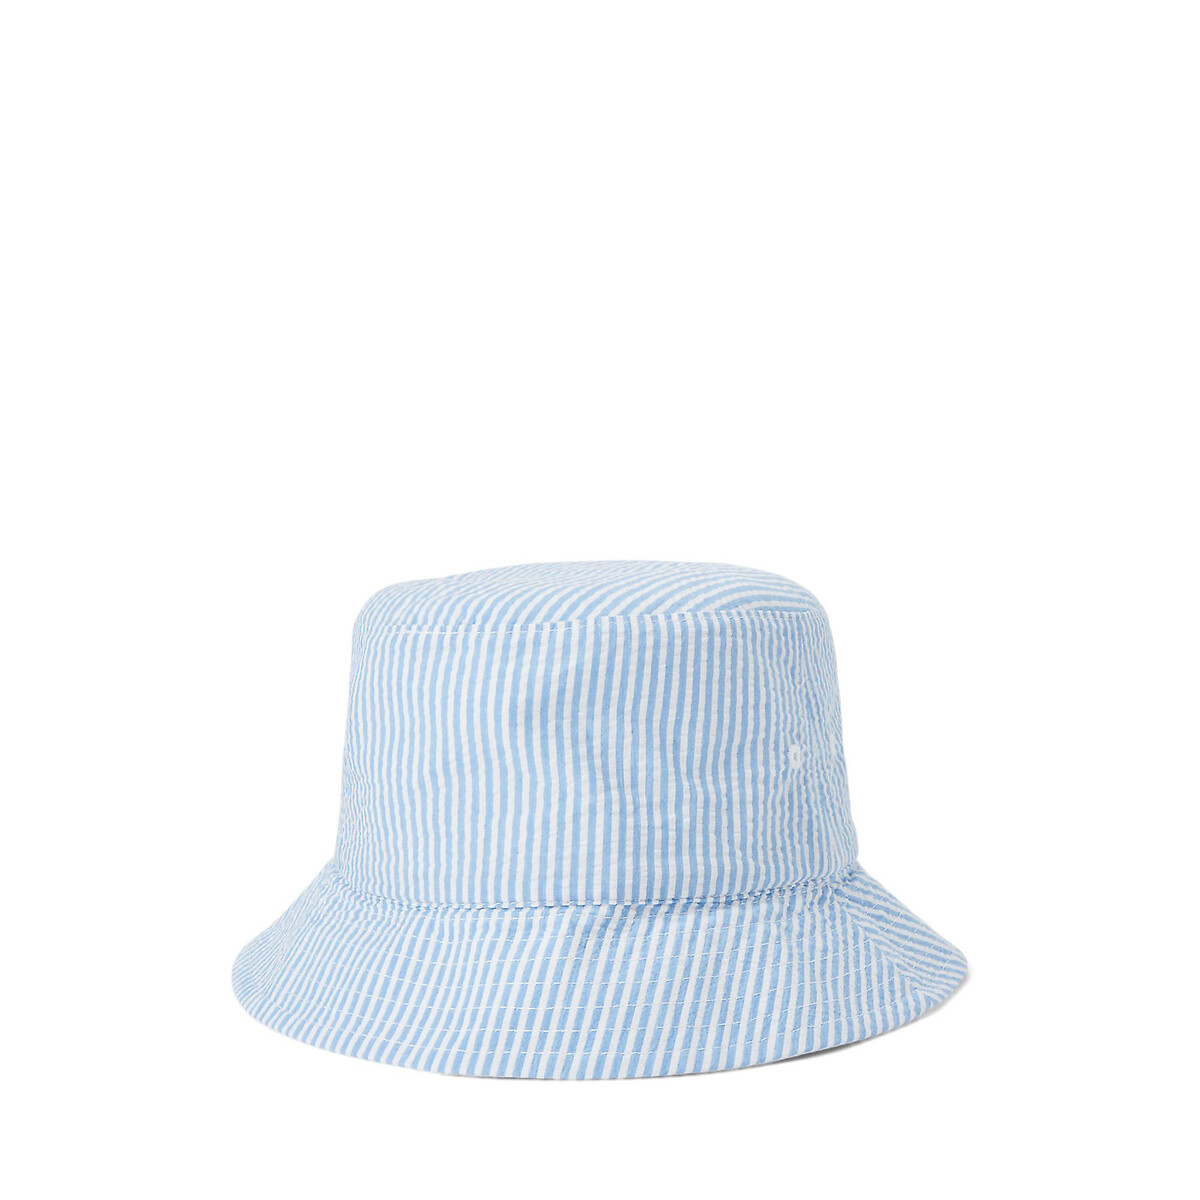 Шляпа-боб двухсторонняя из тонкой полосатой ткани  L/XL белый LaRedoute, размер L/XL Шляпа-боб двухсторонняя из тонкой полосатой ткани  L/XL белый - фото 2